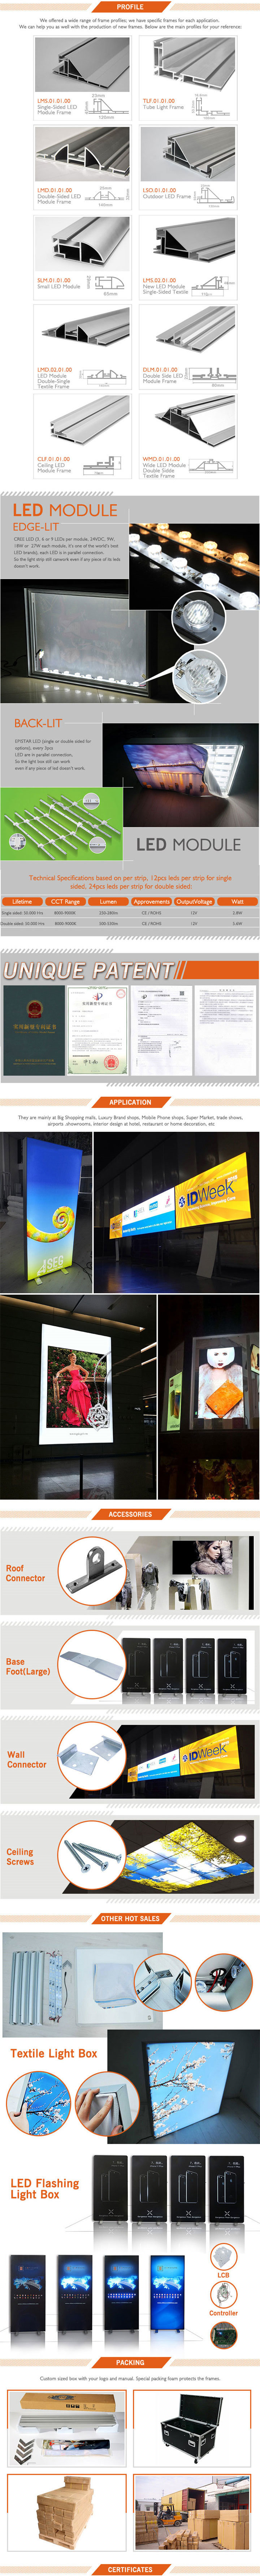 Shopping Mall Frameless Aluminum Profile Advertising Fabric Light Box Sign